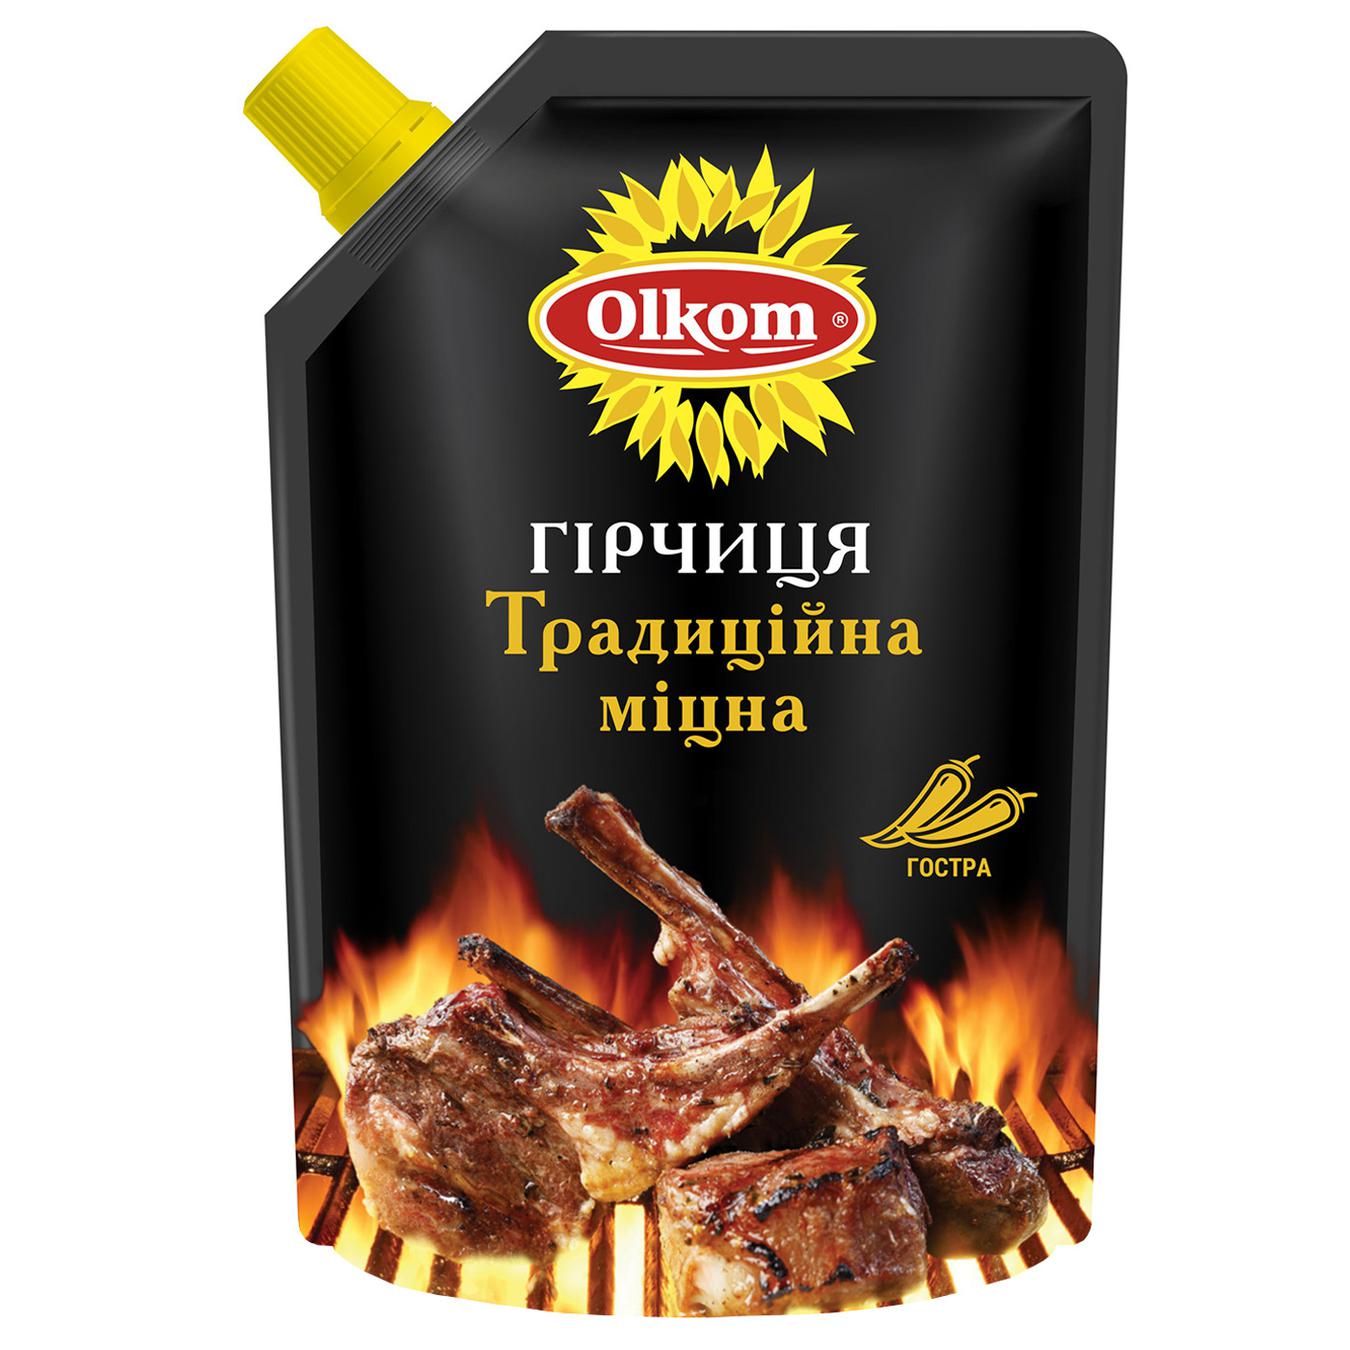 Olkom Mustard Spicy Taste 120g